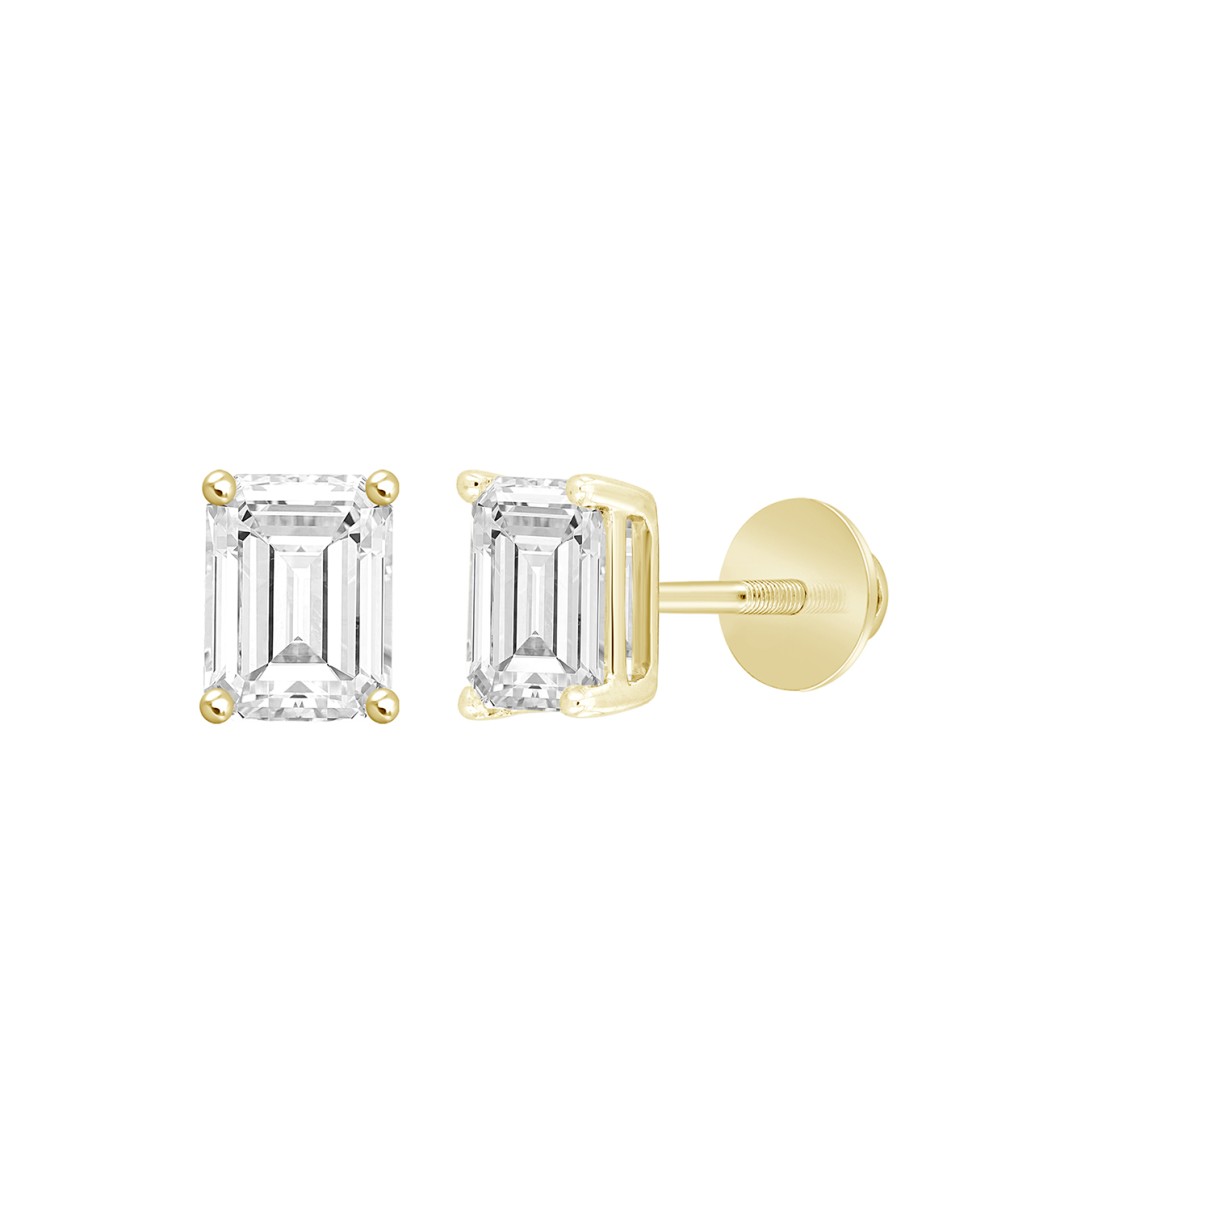 LADIES SOLITAIRE EARRINGS 1CT EMERALD DIAMOND 14K YELLOW GOLD